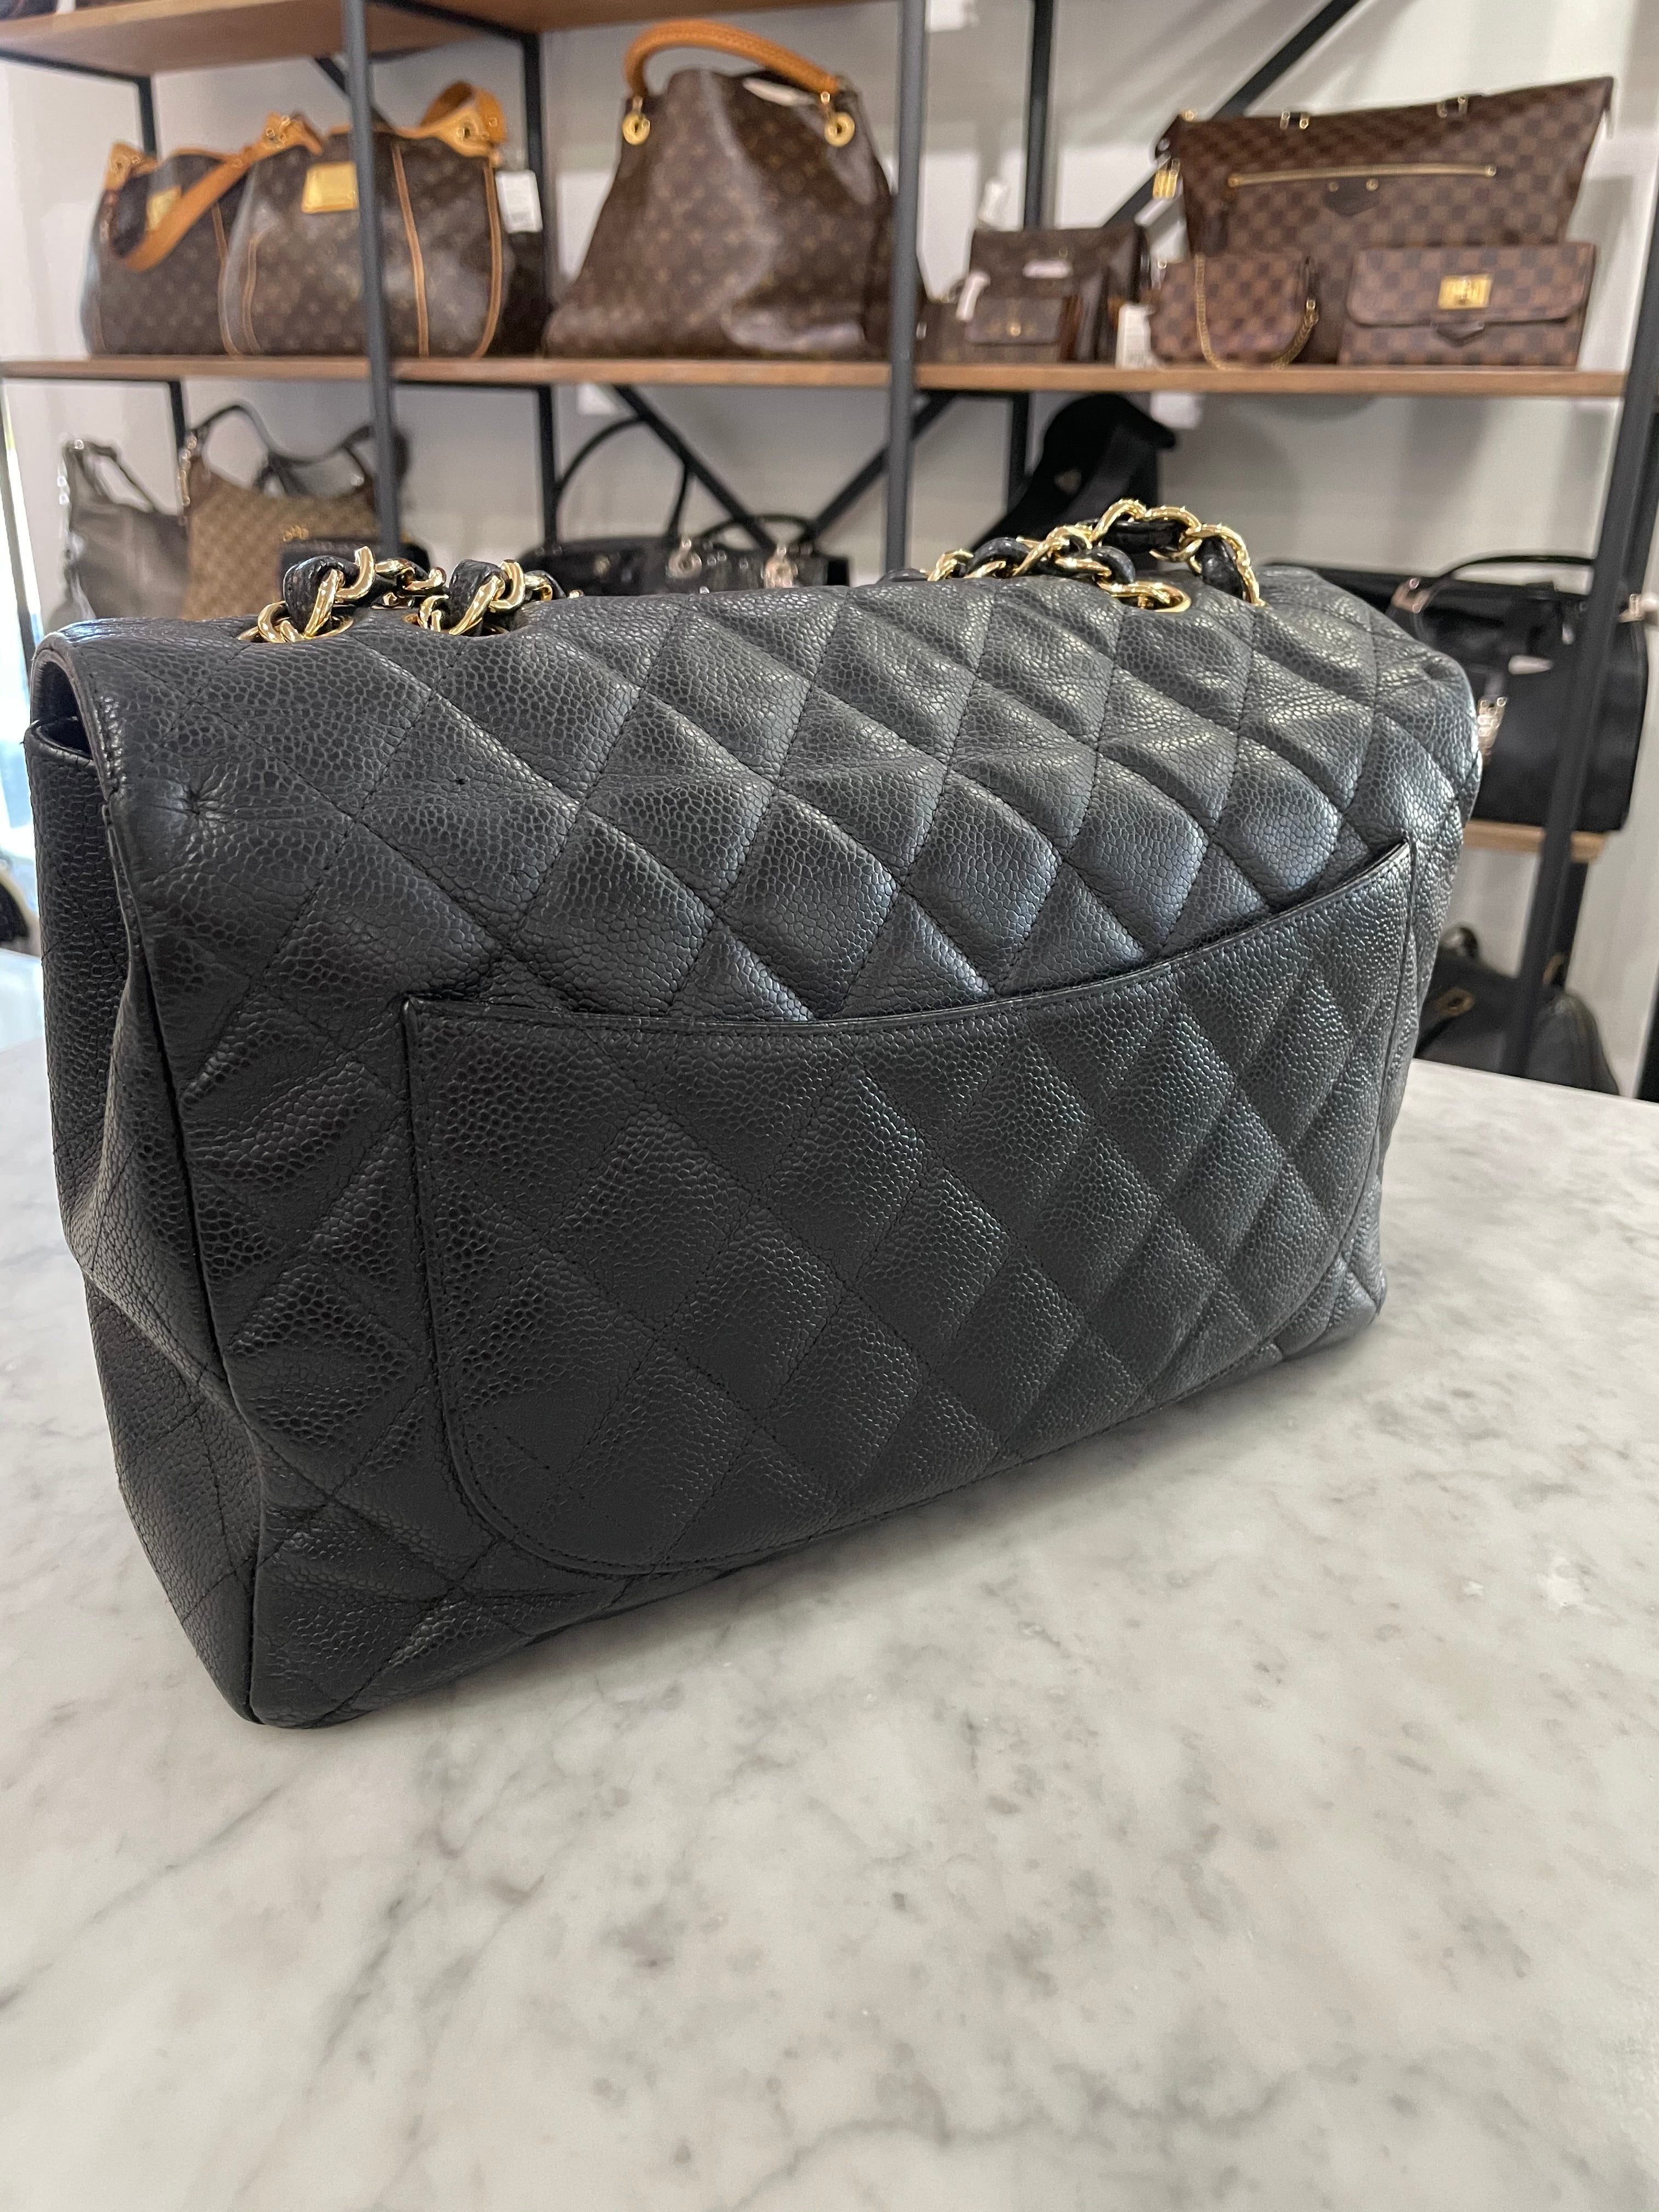 Pre-Loved Chanel Tramezzo Jumbo Flap Shoulder Bag in Blue Calfskin